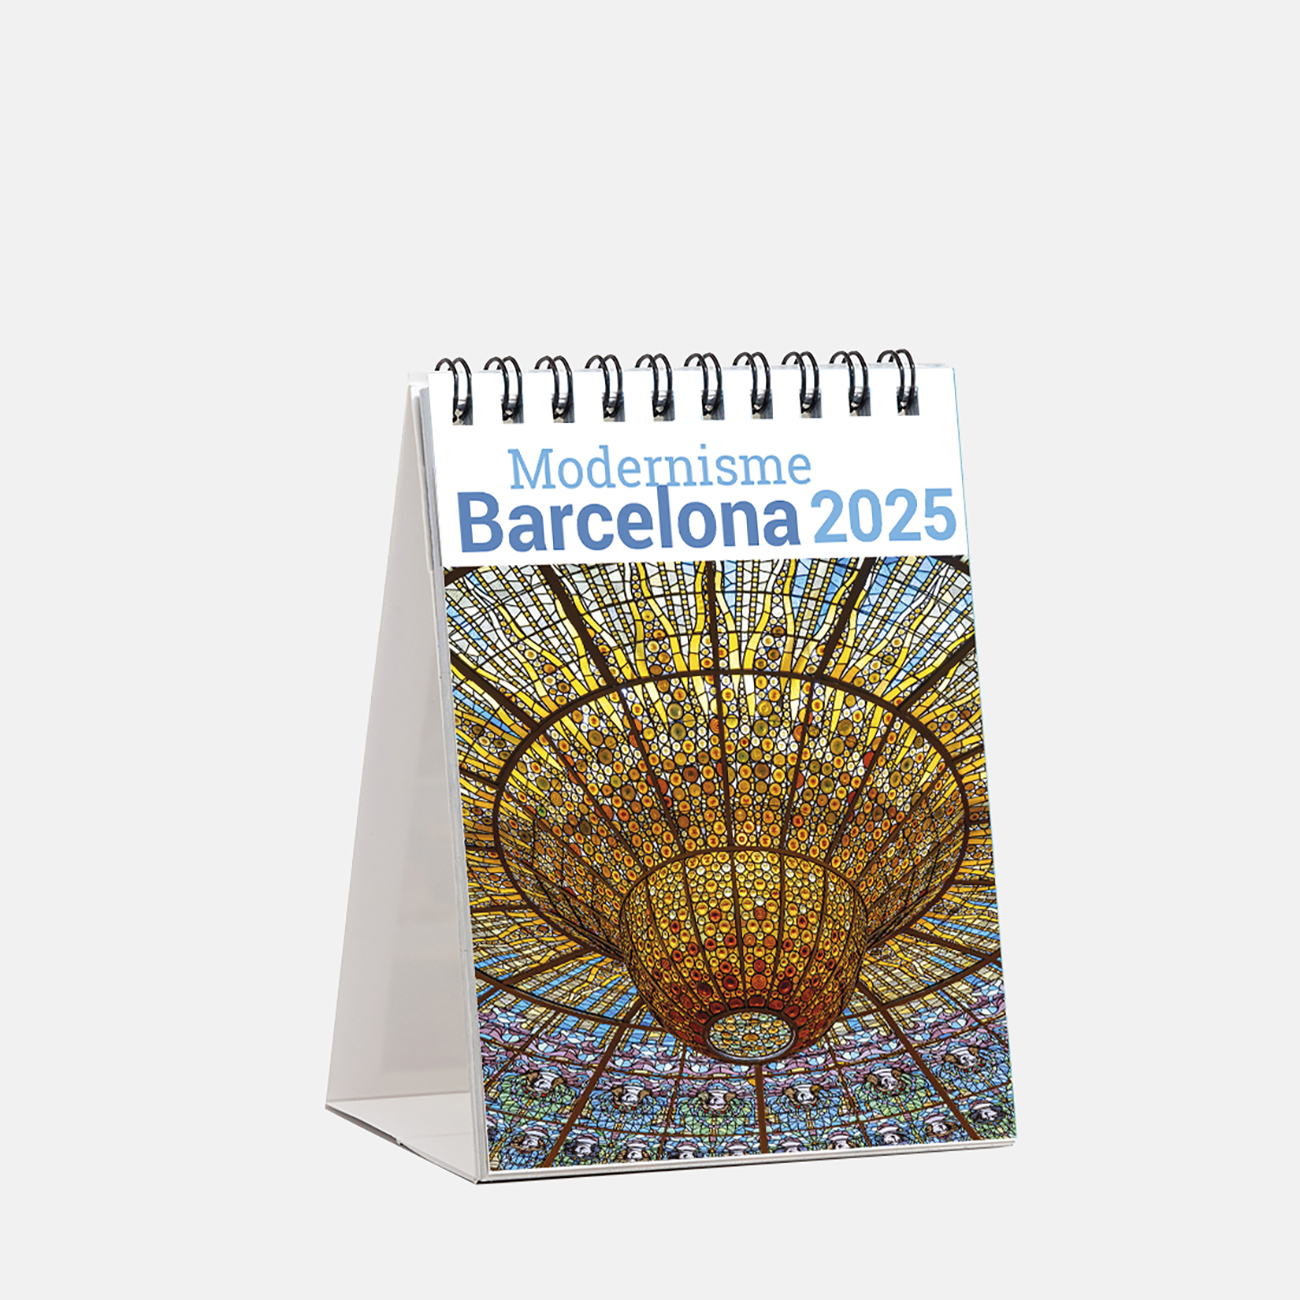 Calendrier 2025 Modernisme Barcelone sm25mod calendario mini 2025 modernisme barcelona